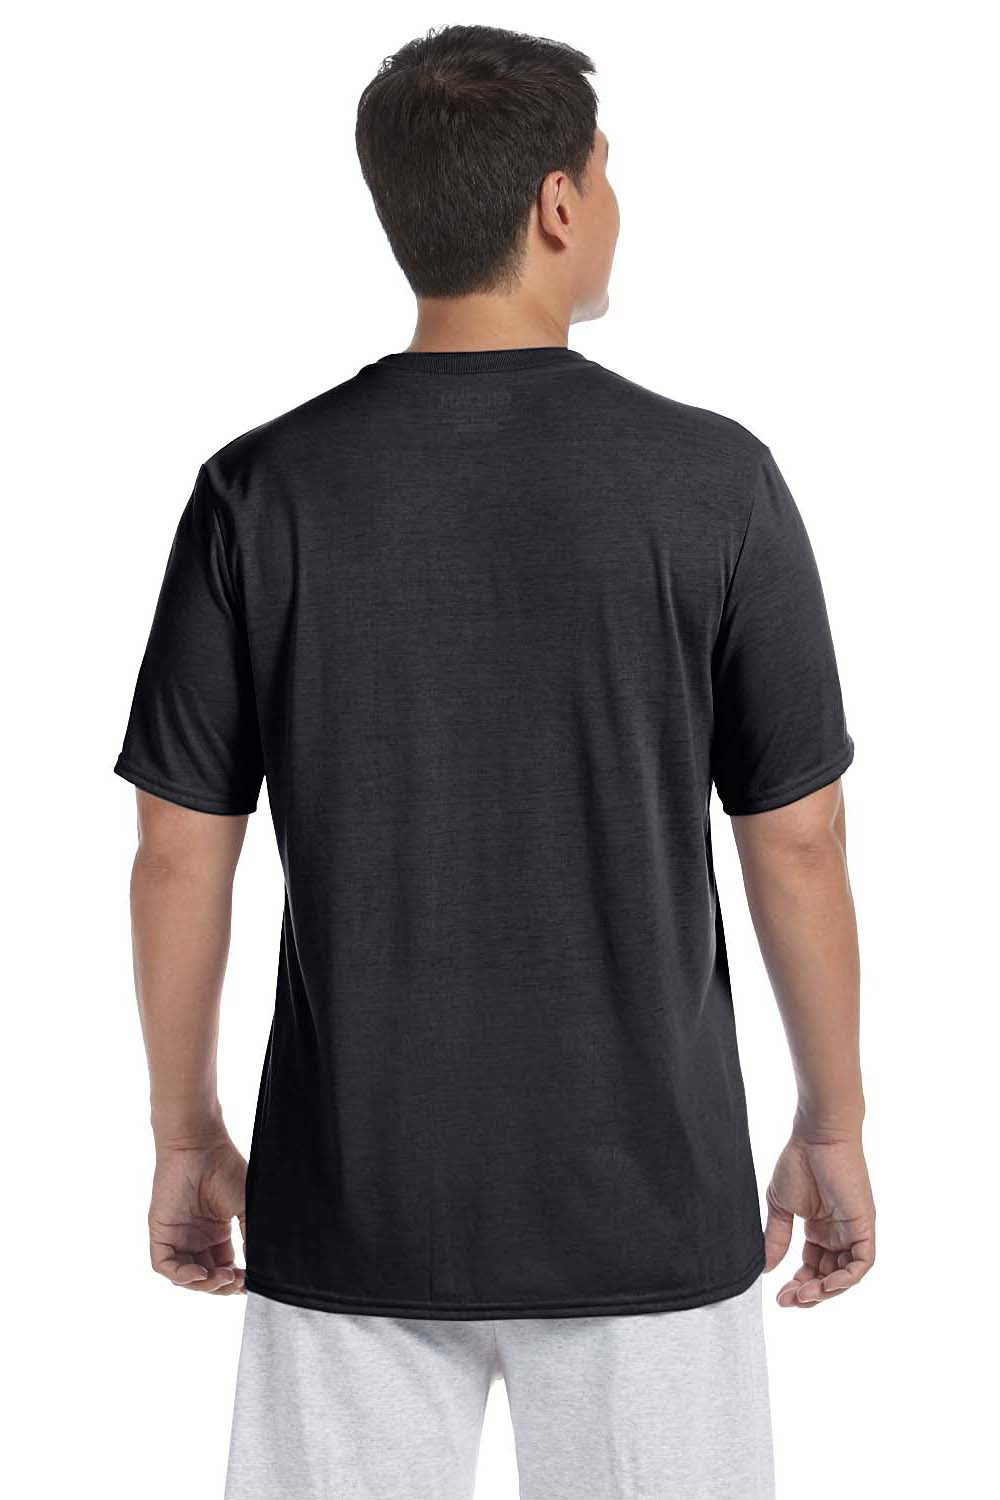 Gildan G420 Mens Performance Jersey Moisture Wicking Short Sleeve Crewneck T-Shirt Black Back